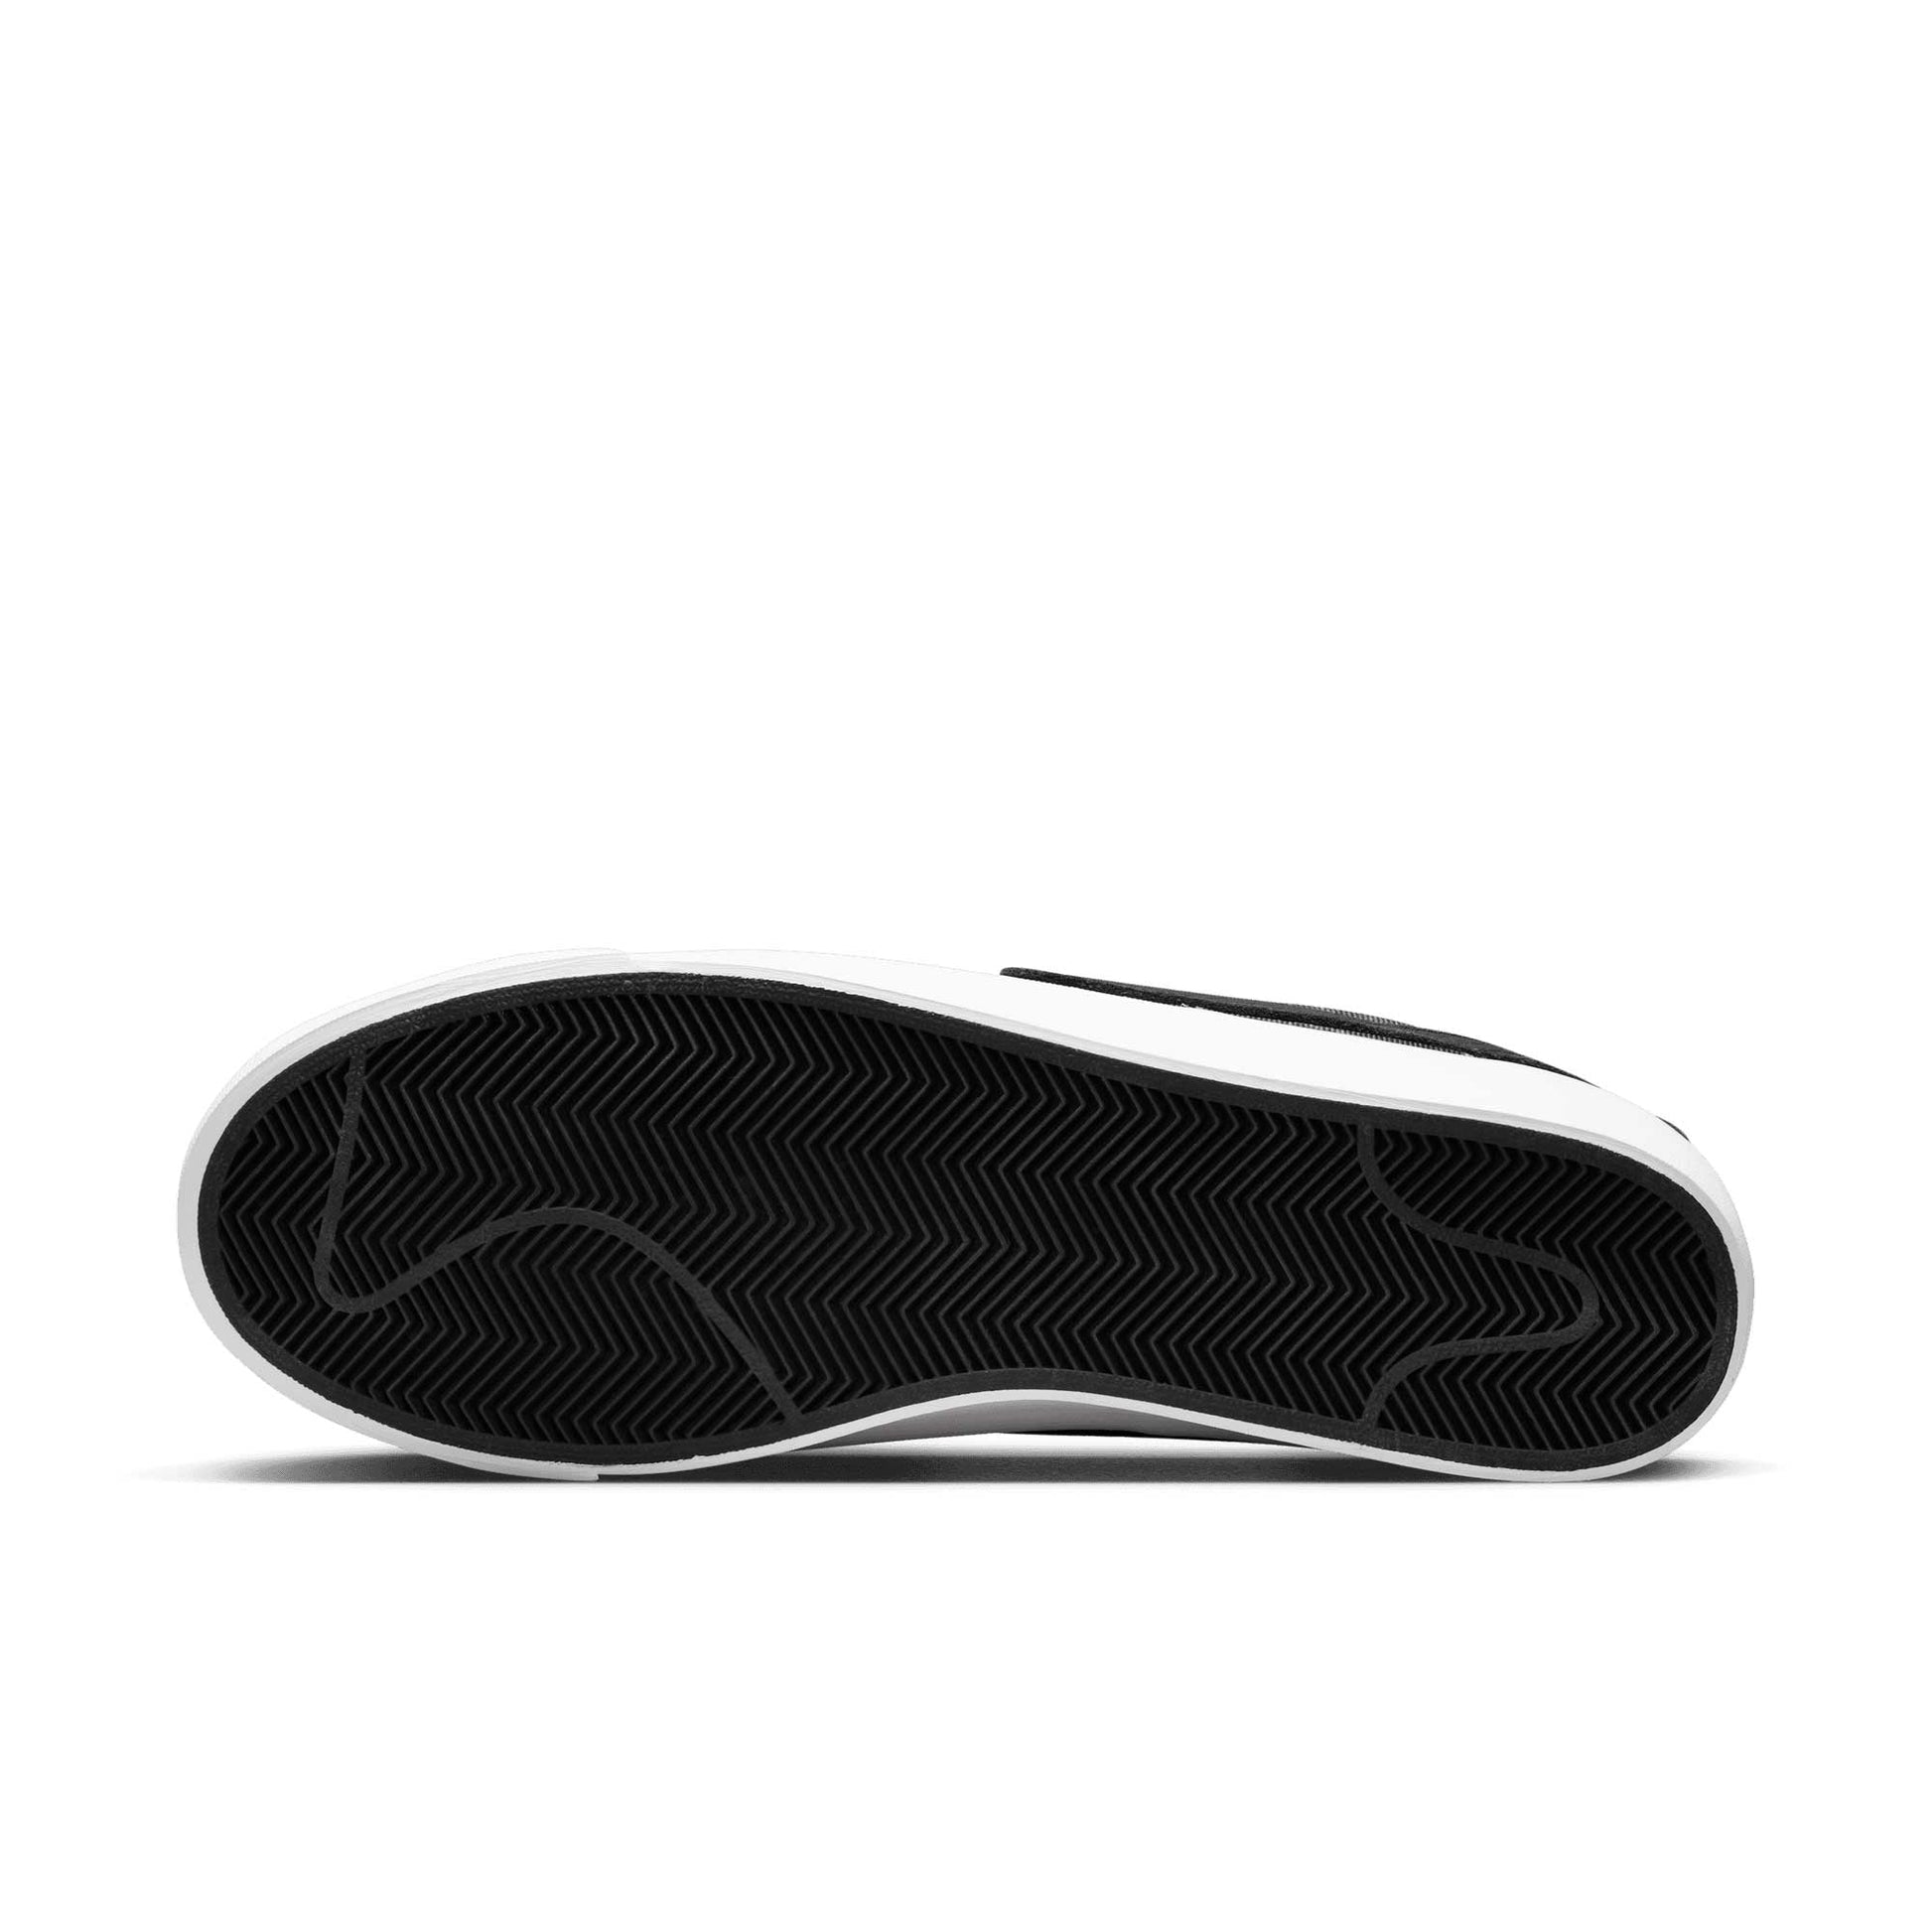 Nike SB Blazer Low Pro GT Premium, black/safety orange-black-photon dust - Tiki Room Skateboards - 9